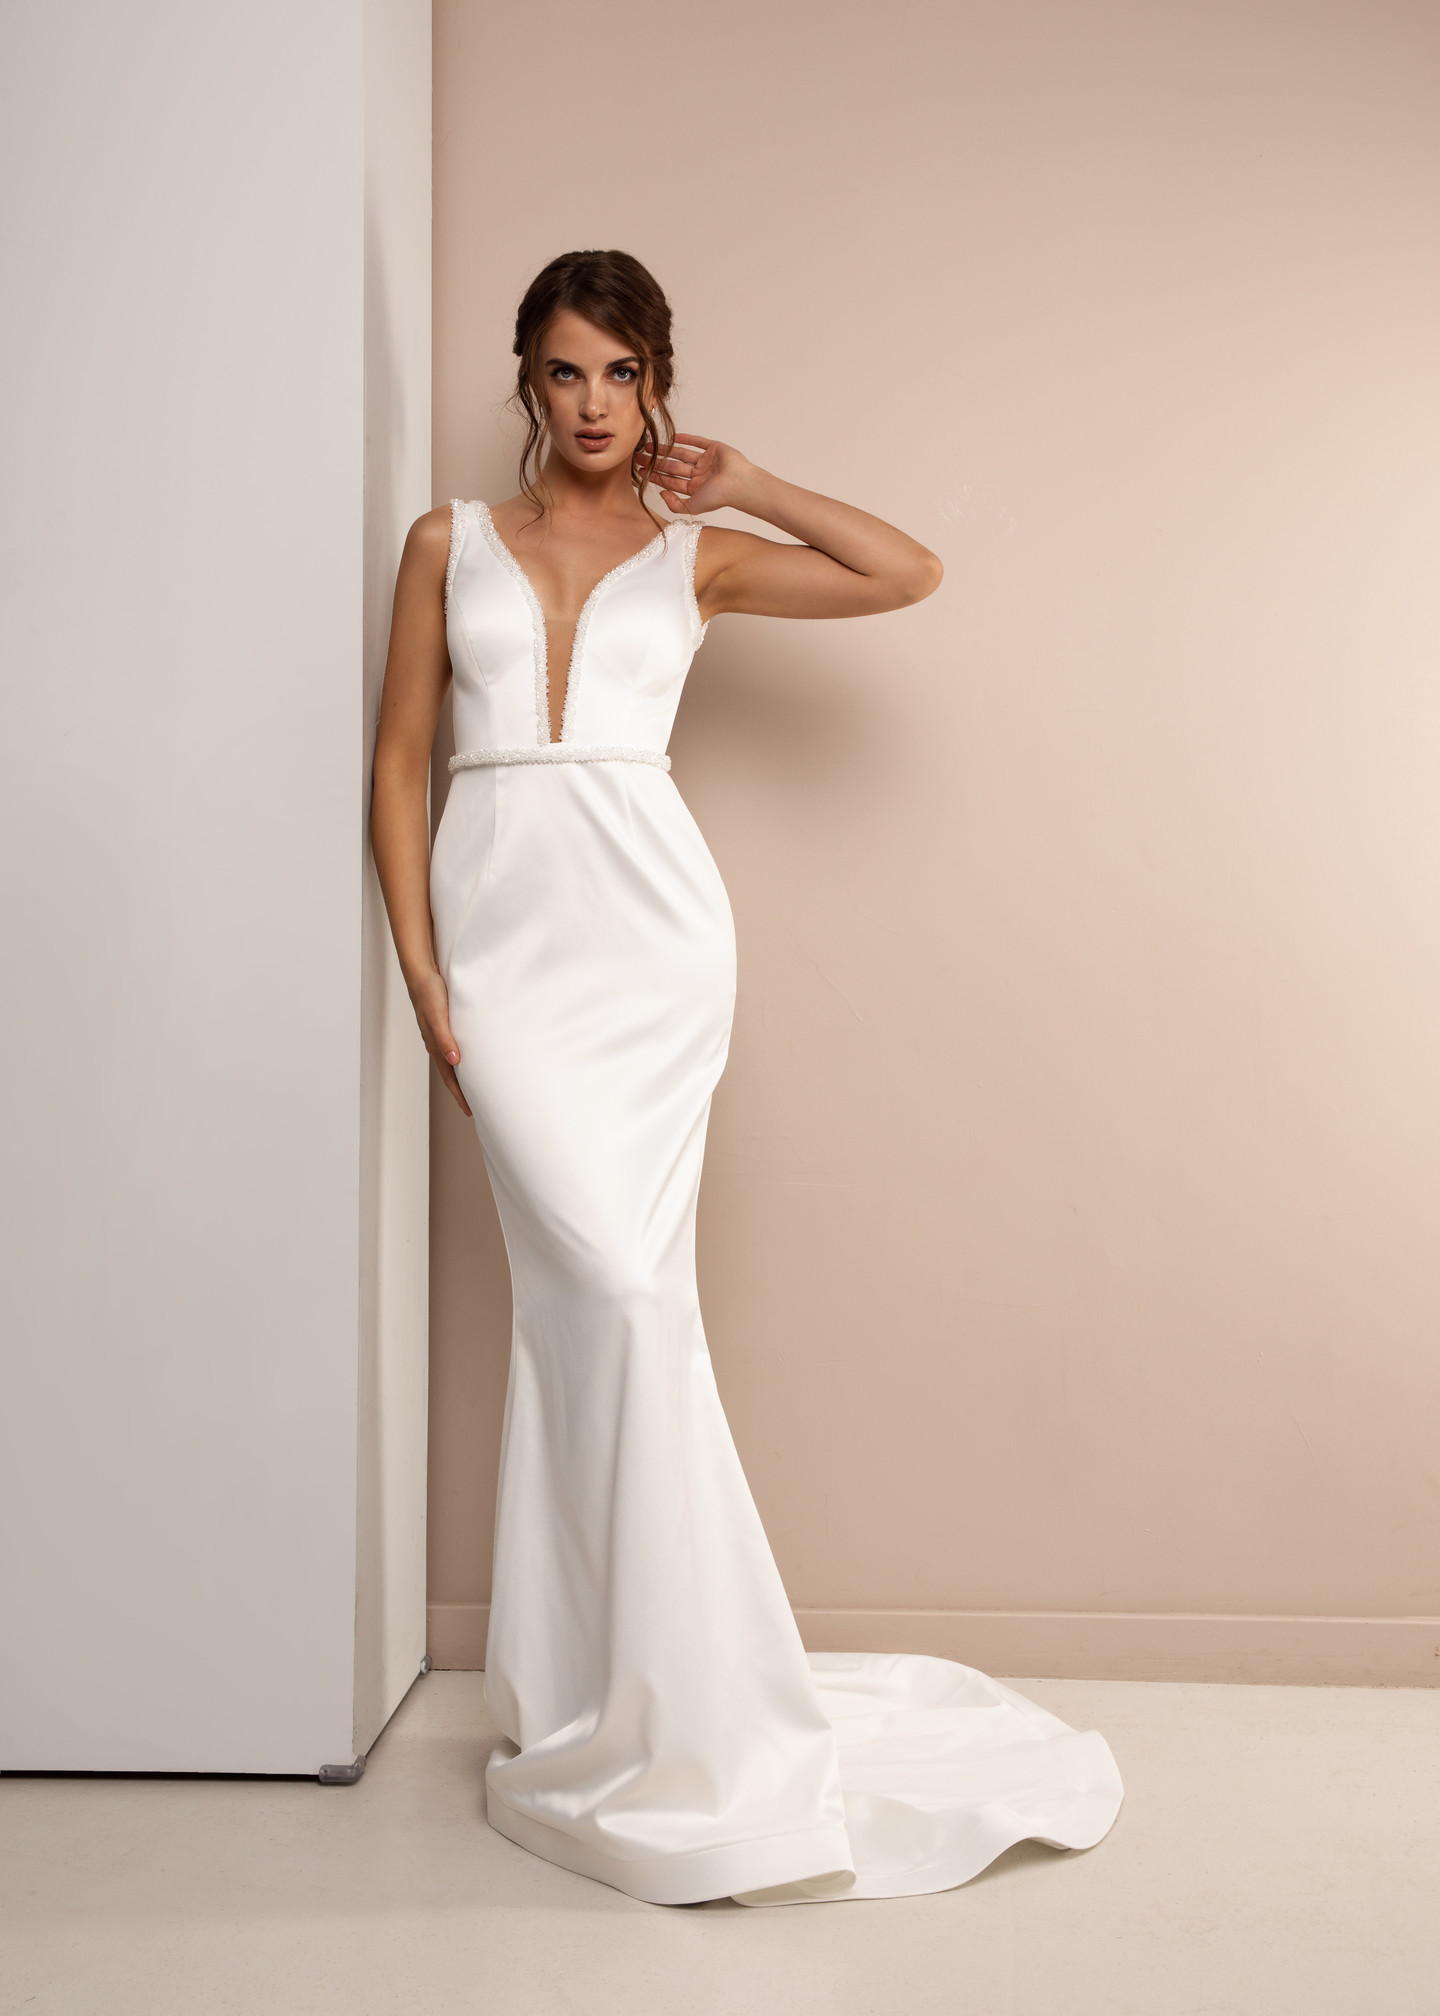 Mikella dress, 2021, couture, dress, bridal, off-white, Mikella, embroidery, sheath silhouette, train